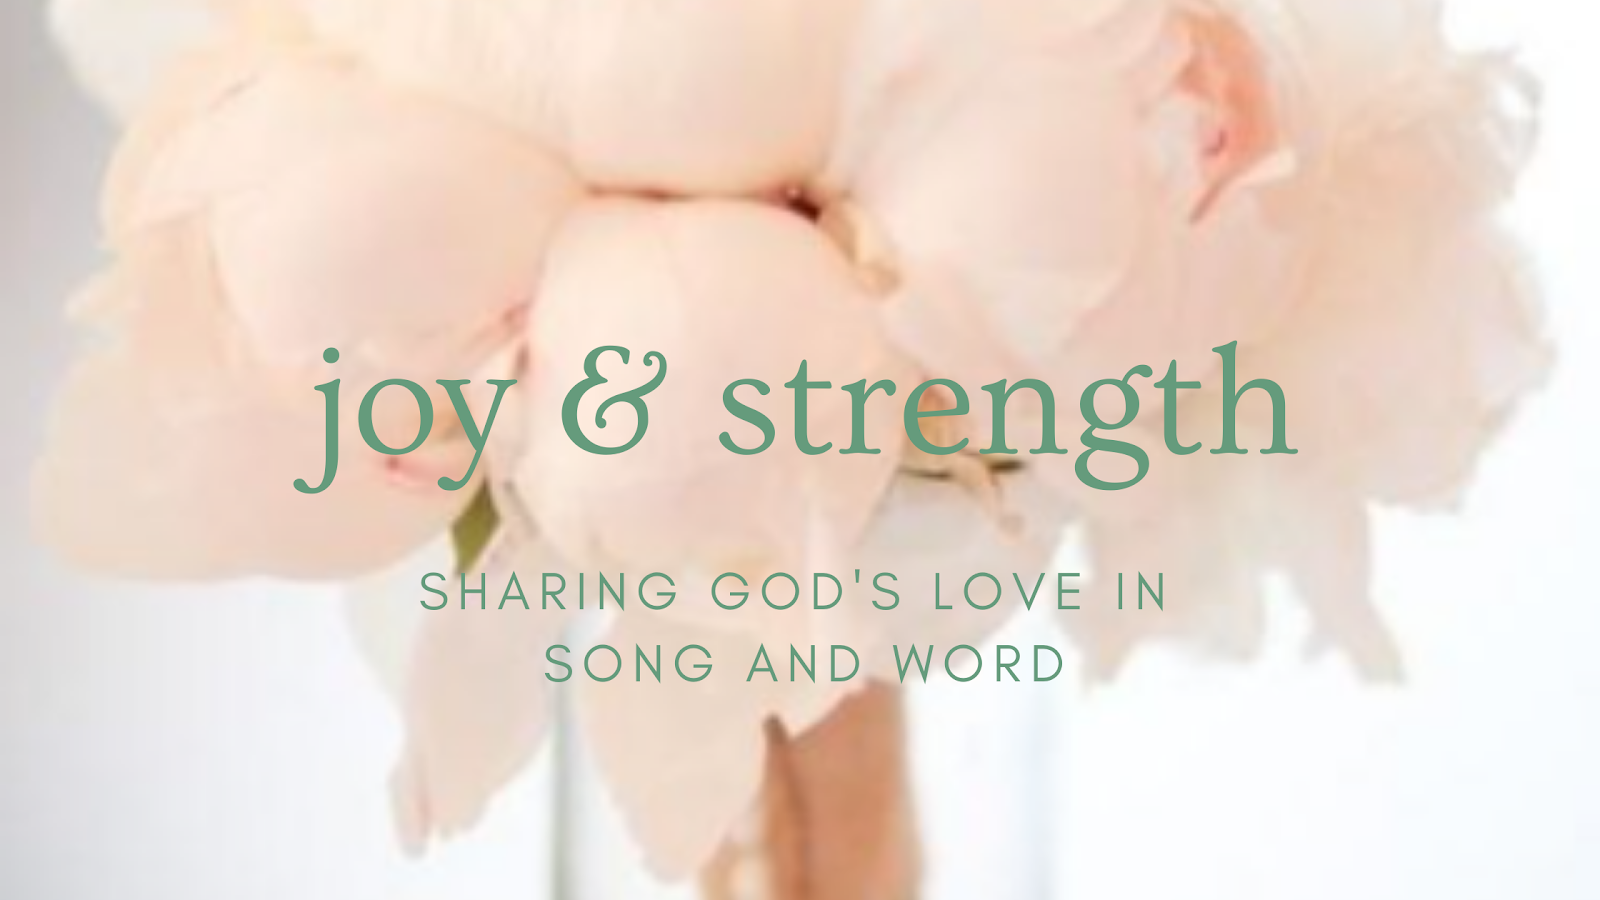 Joy and Strength (Christian life and music)